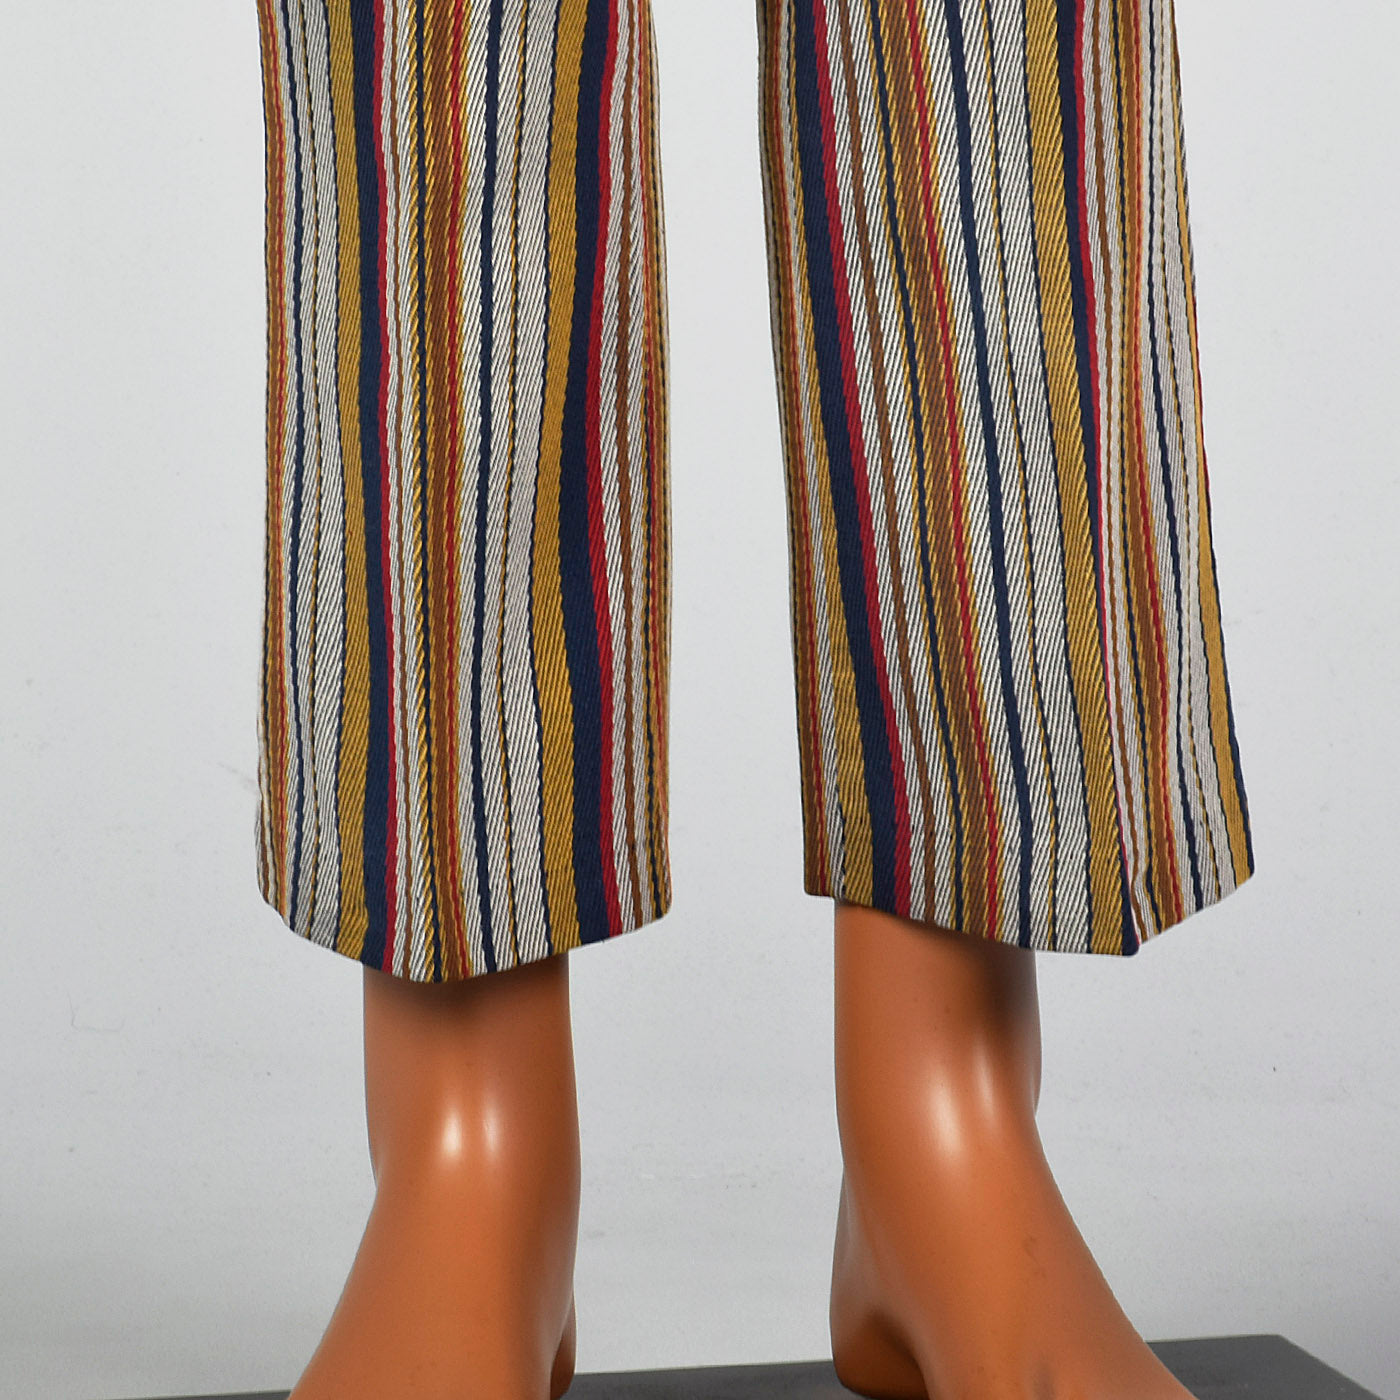 1970s Mens Flat Front Stripe Pants